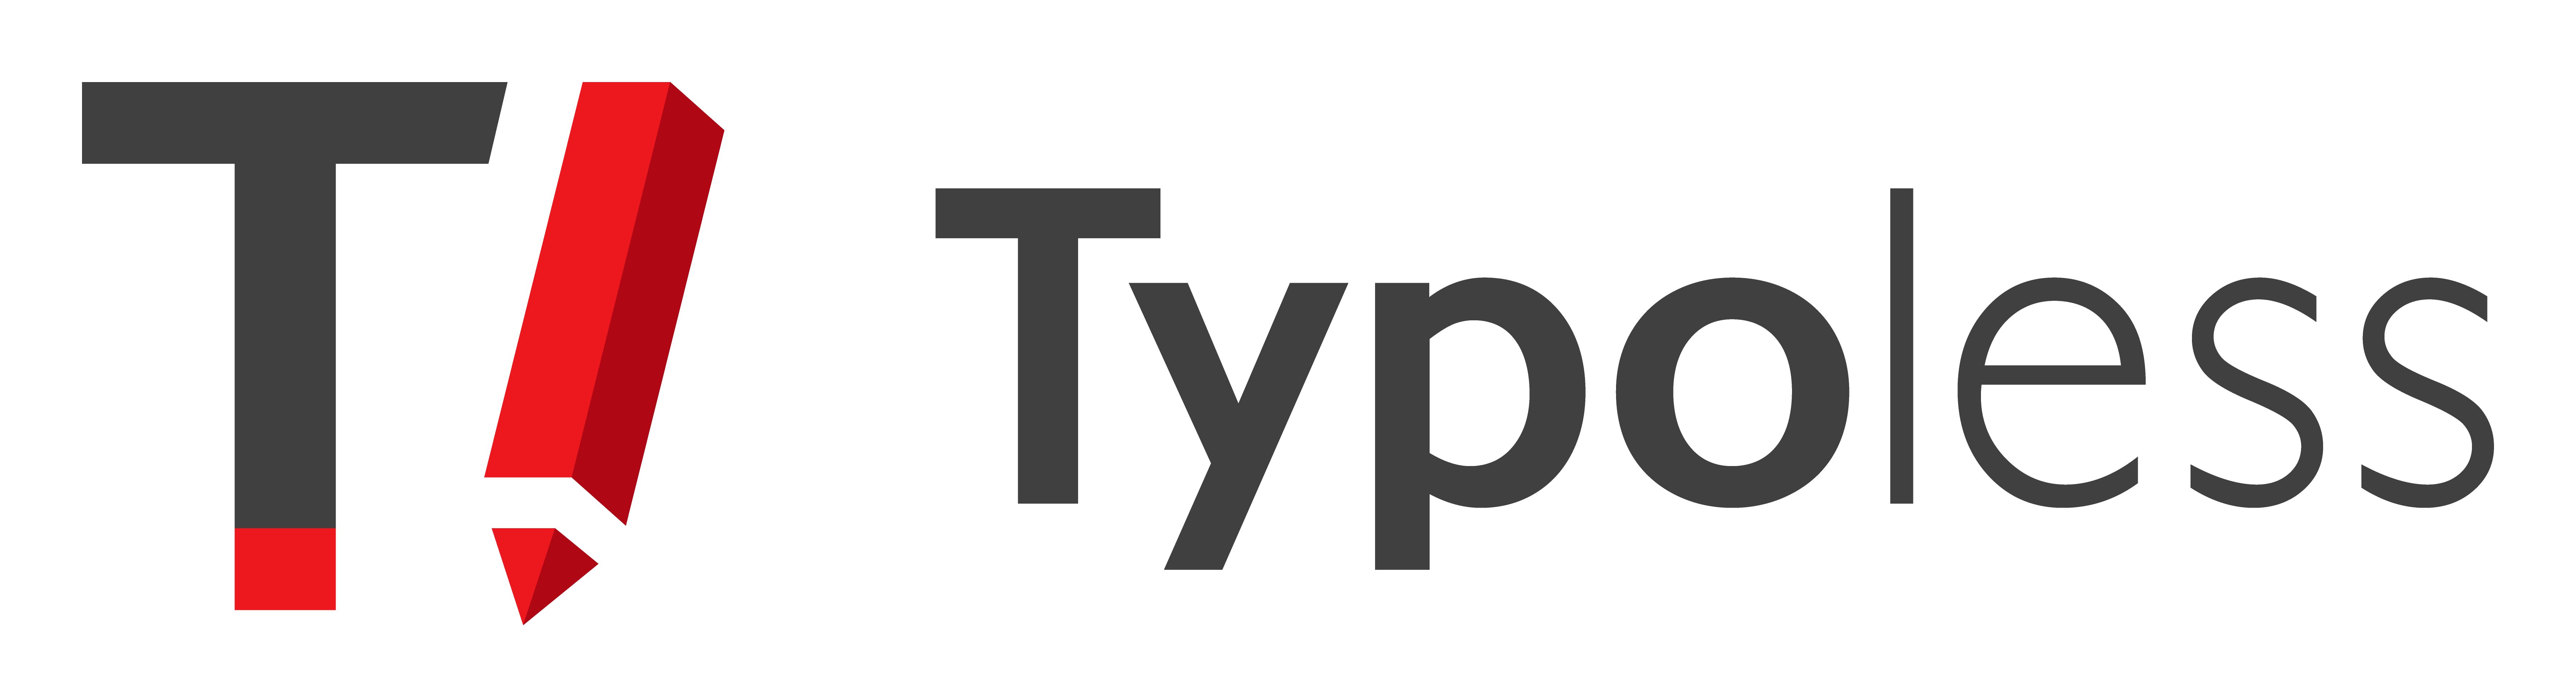 Typoless_PNG_1